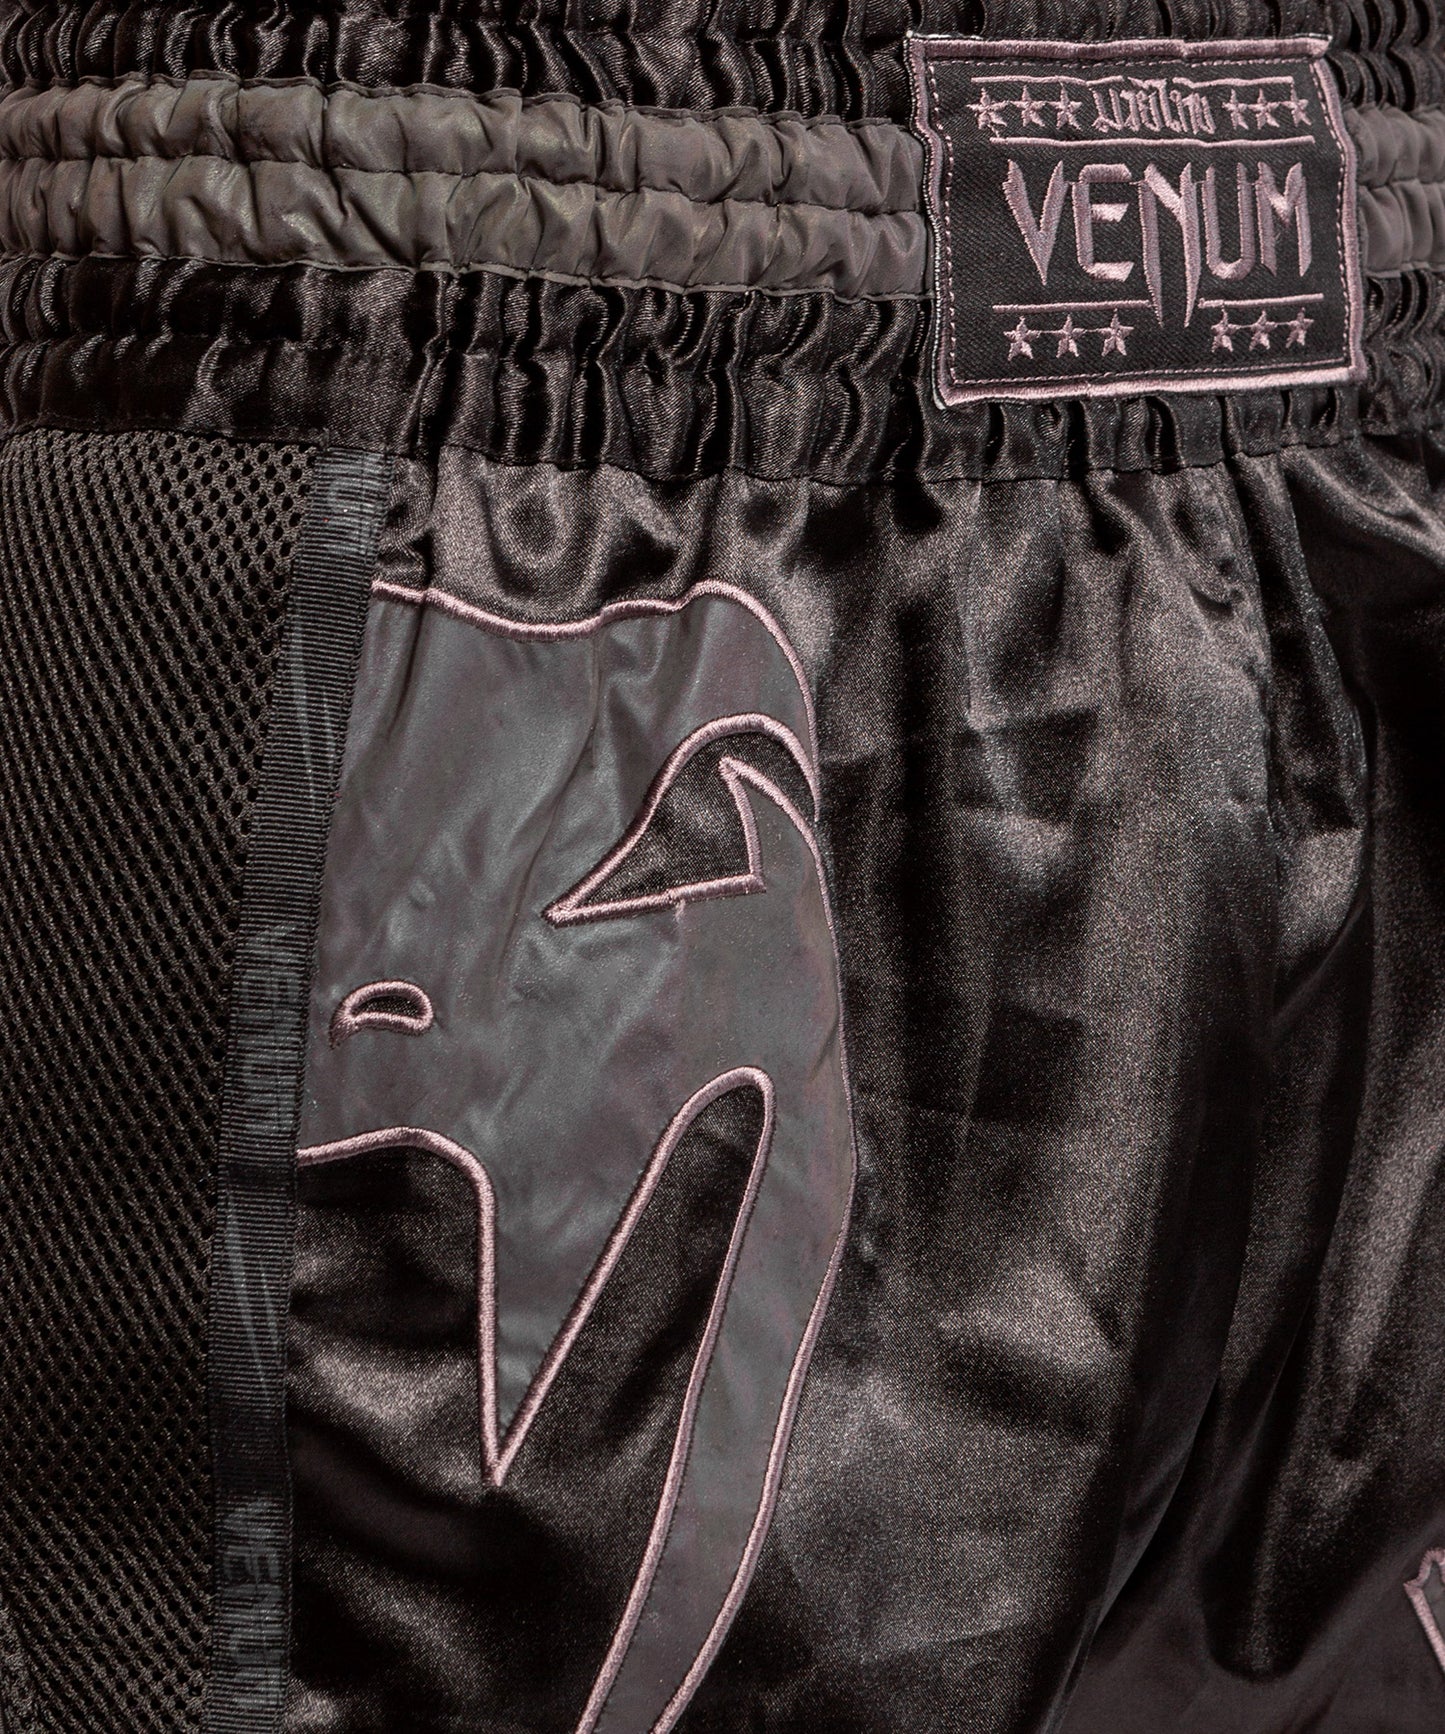 Venum Giant Glow Muay Thai Shorts - Black